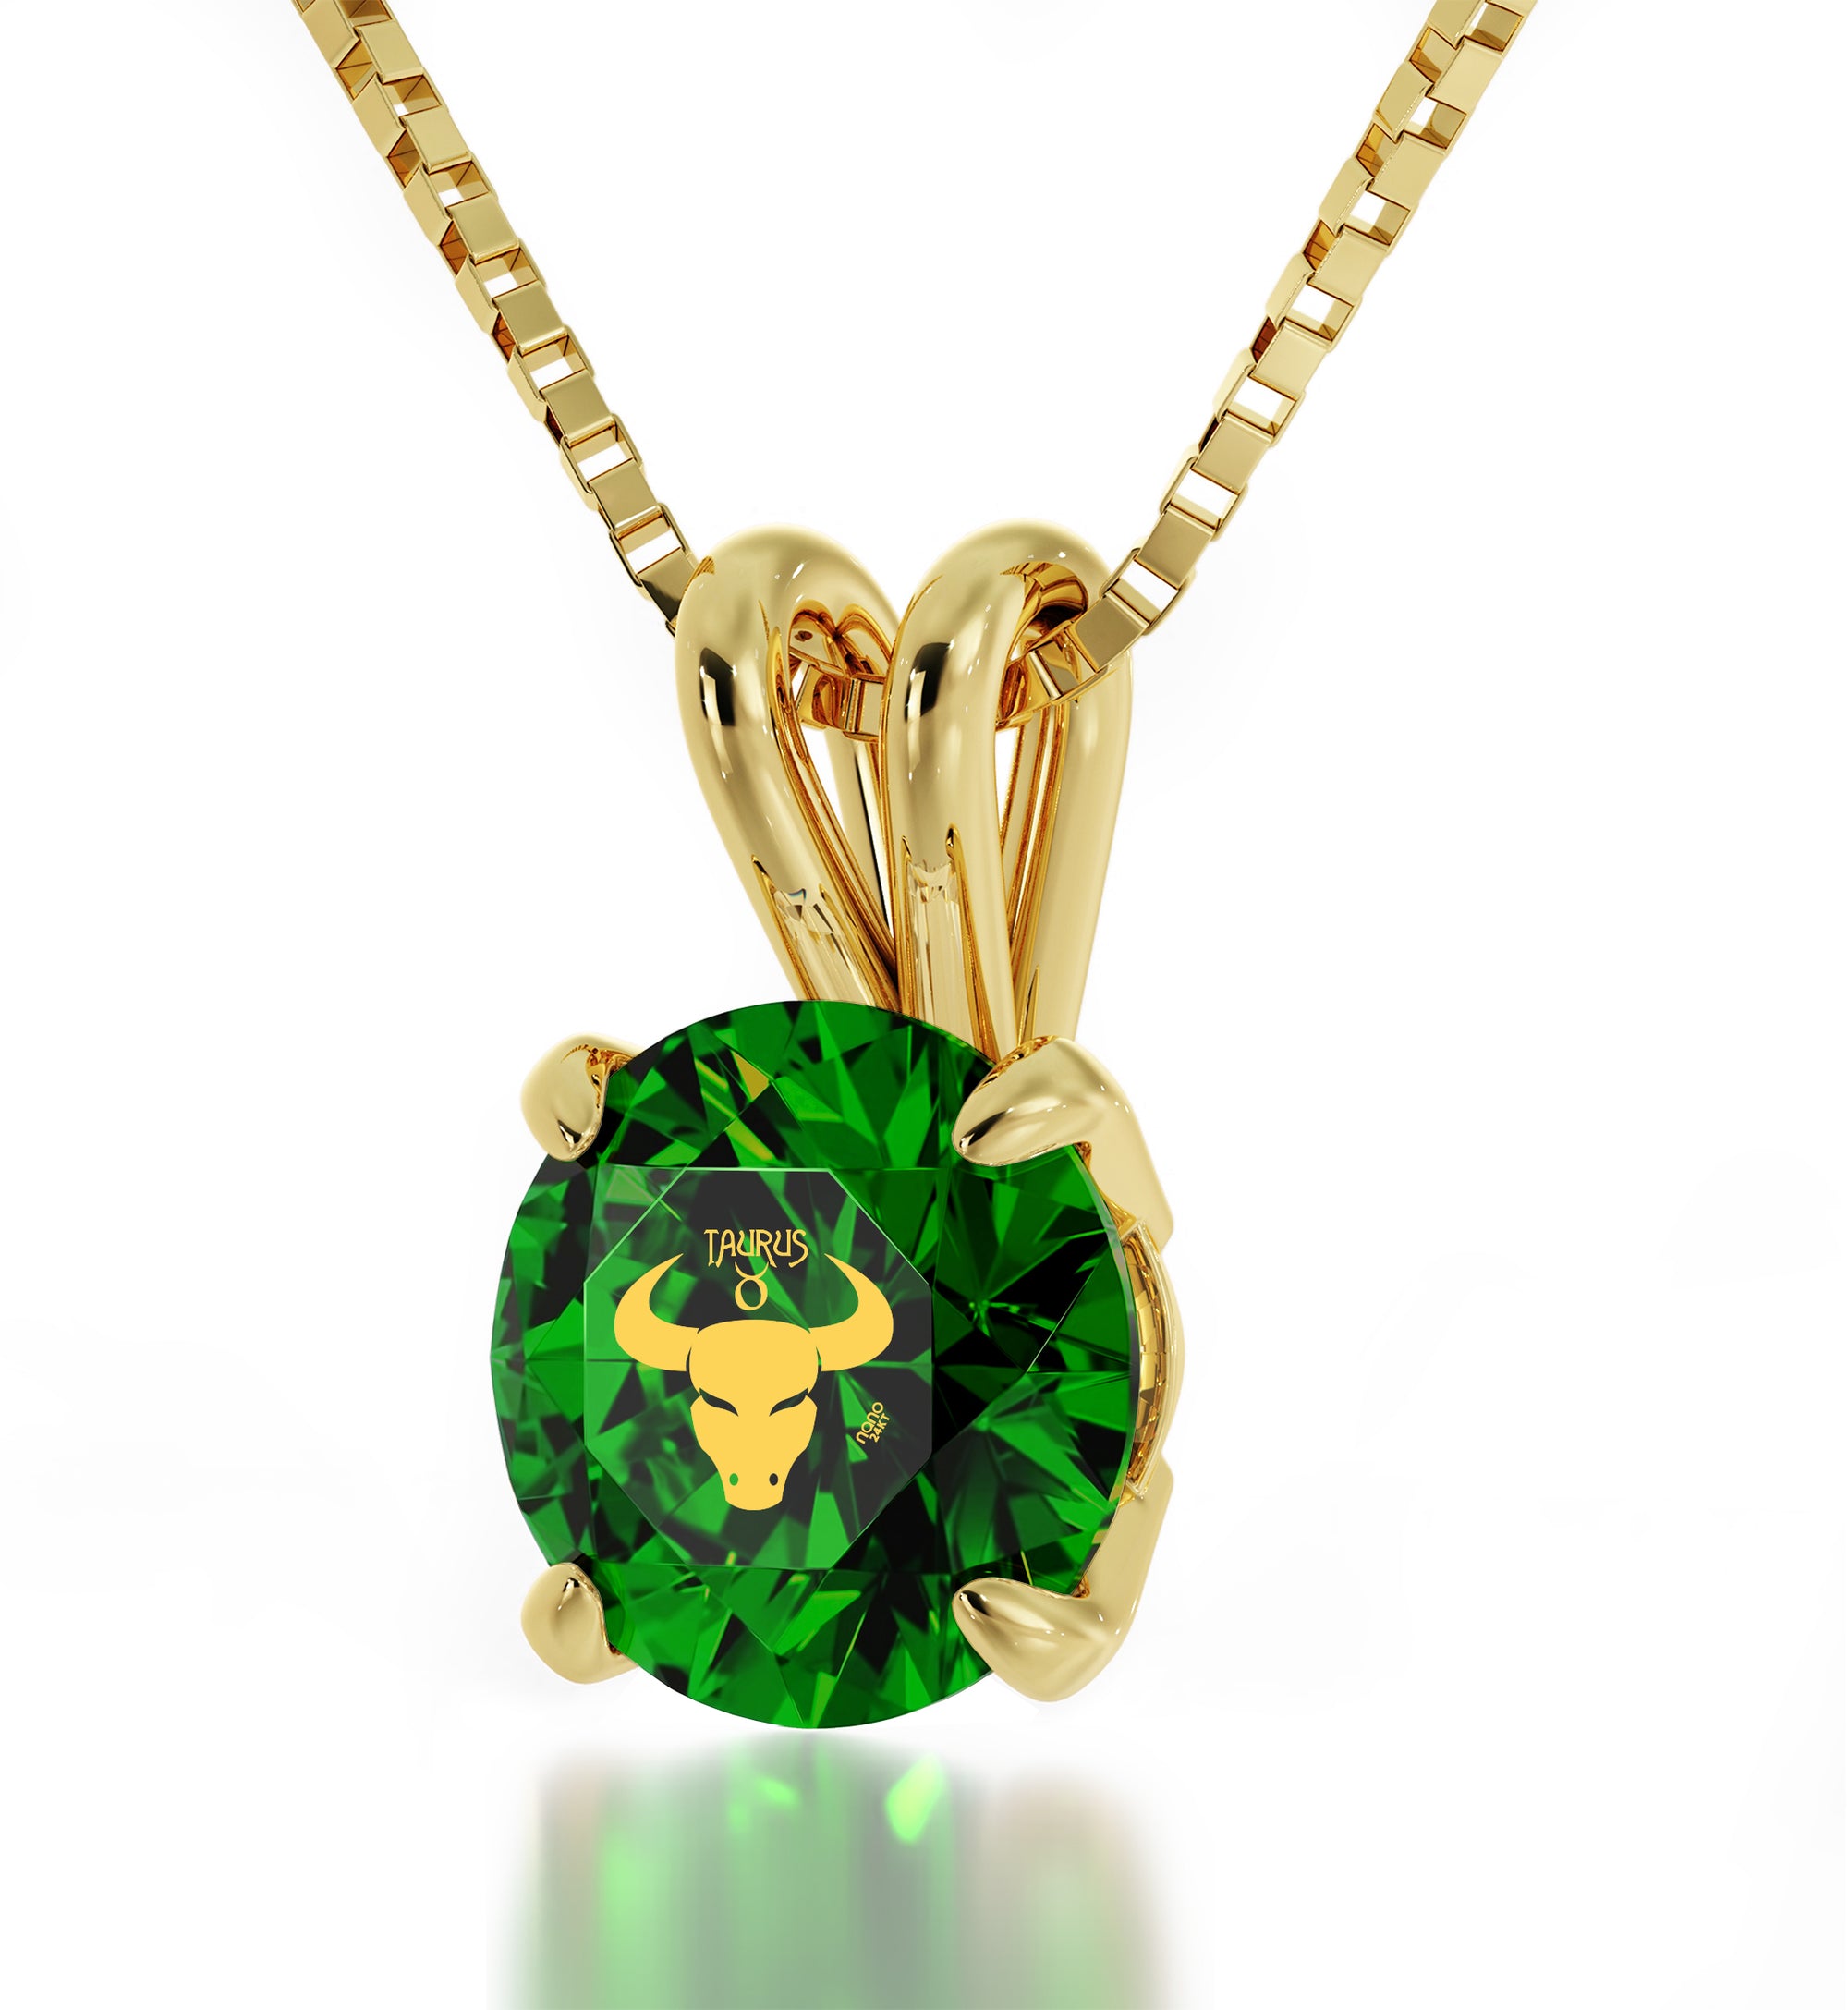 24k for Zodiac Women NanoStyle inscribed - Jewelry | Taurus Jewelry Necklace gold Unique